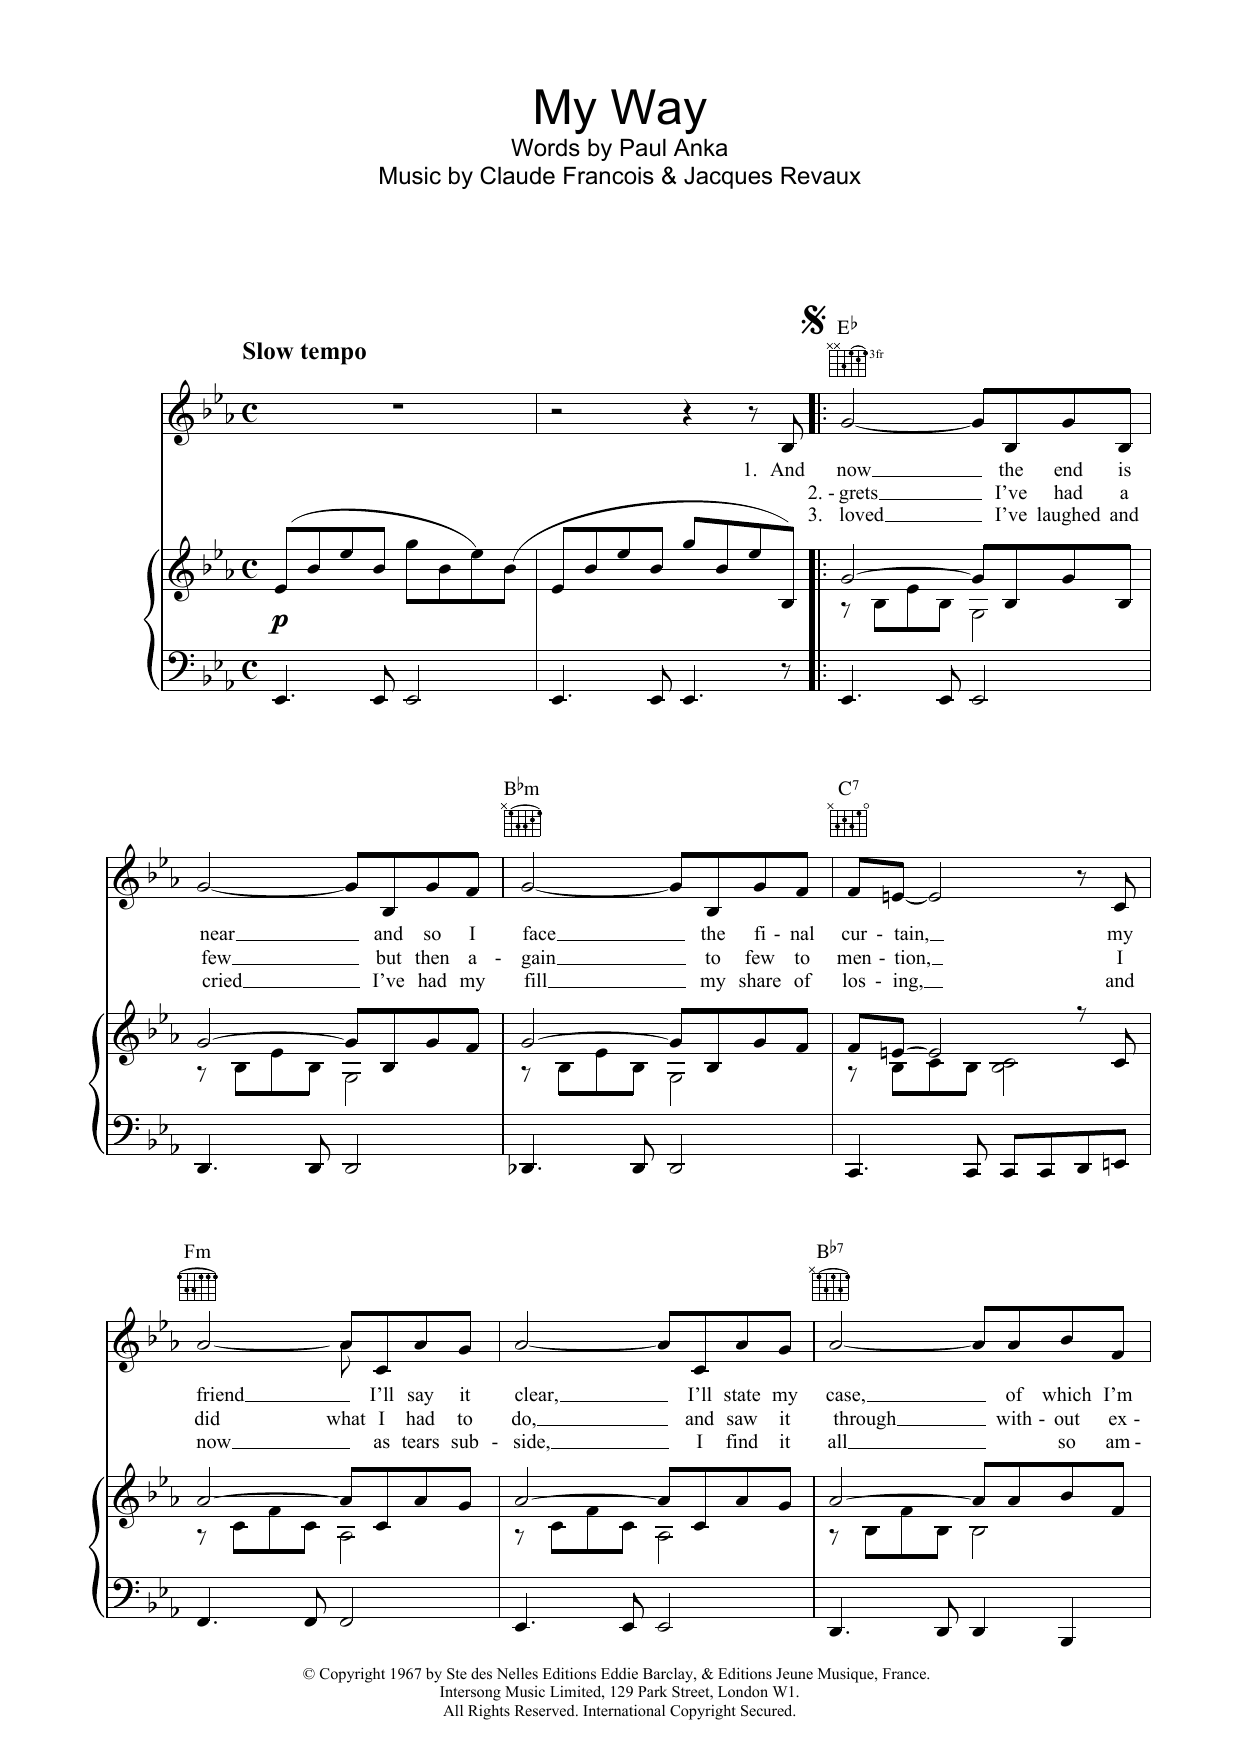 Frank Sinatra My Way Sheet Music Notes & Chords for Ukulele - Download or Print PDF